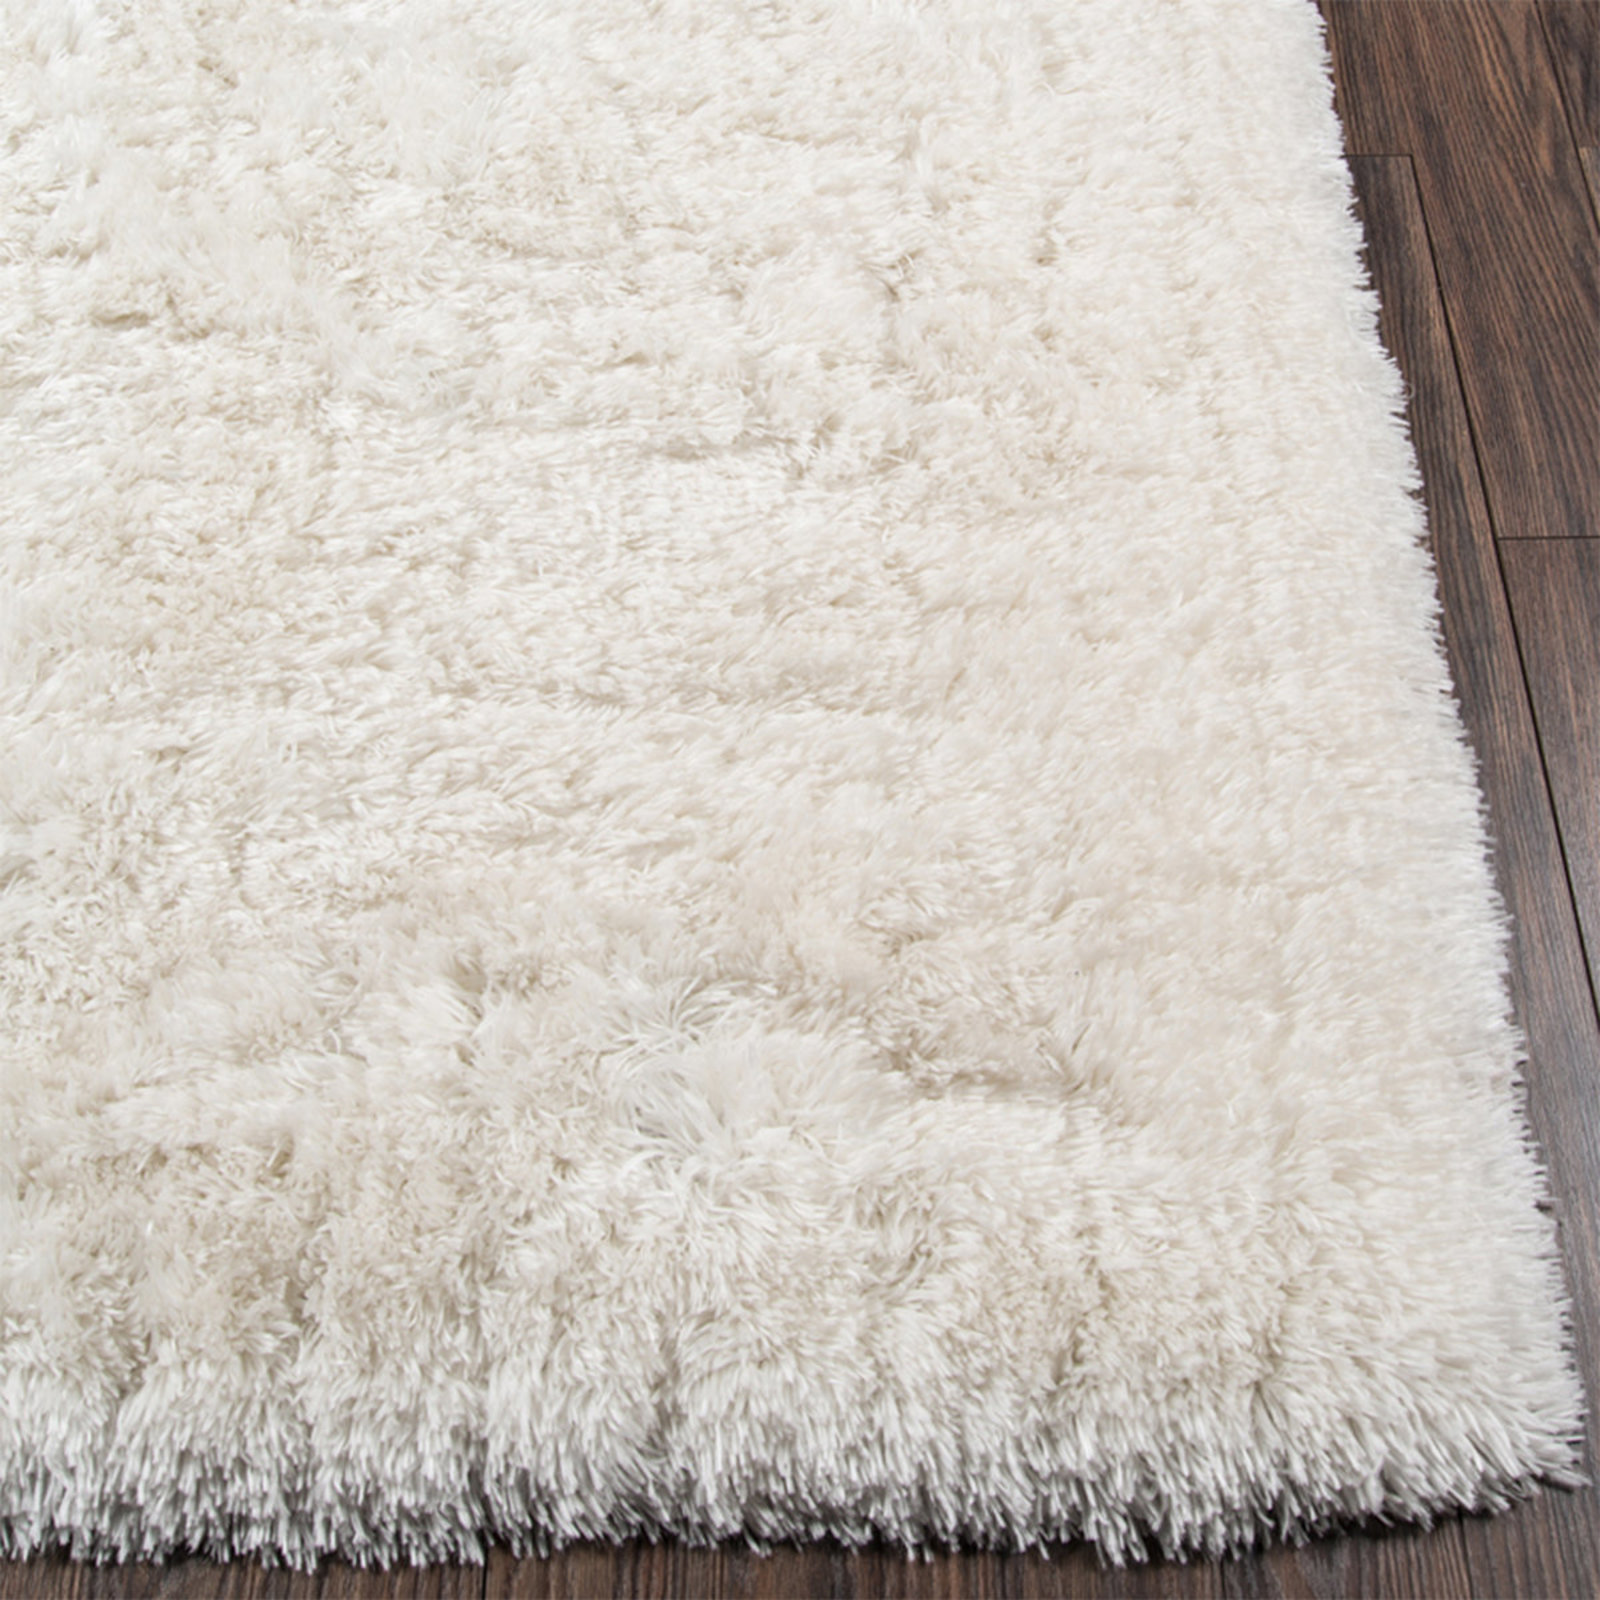 White floor rug photo